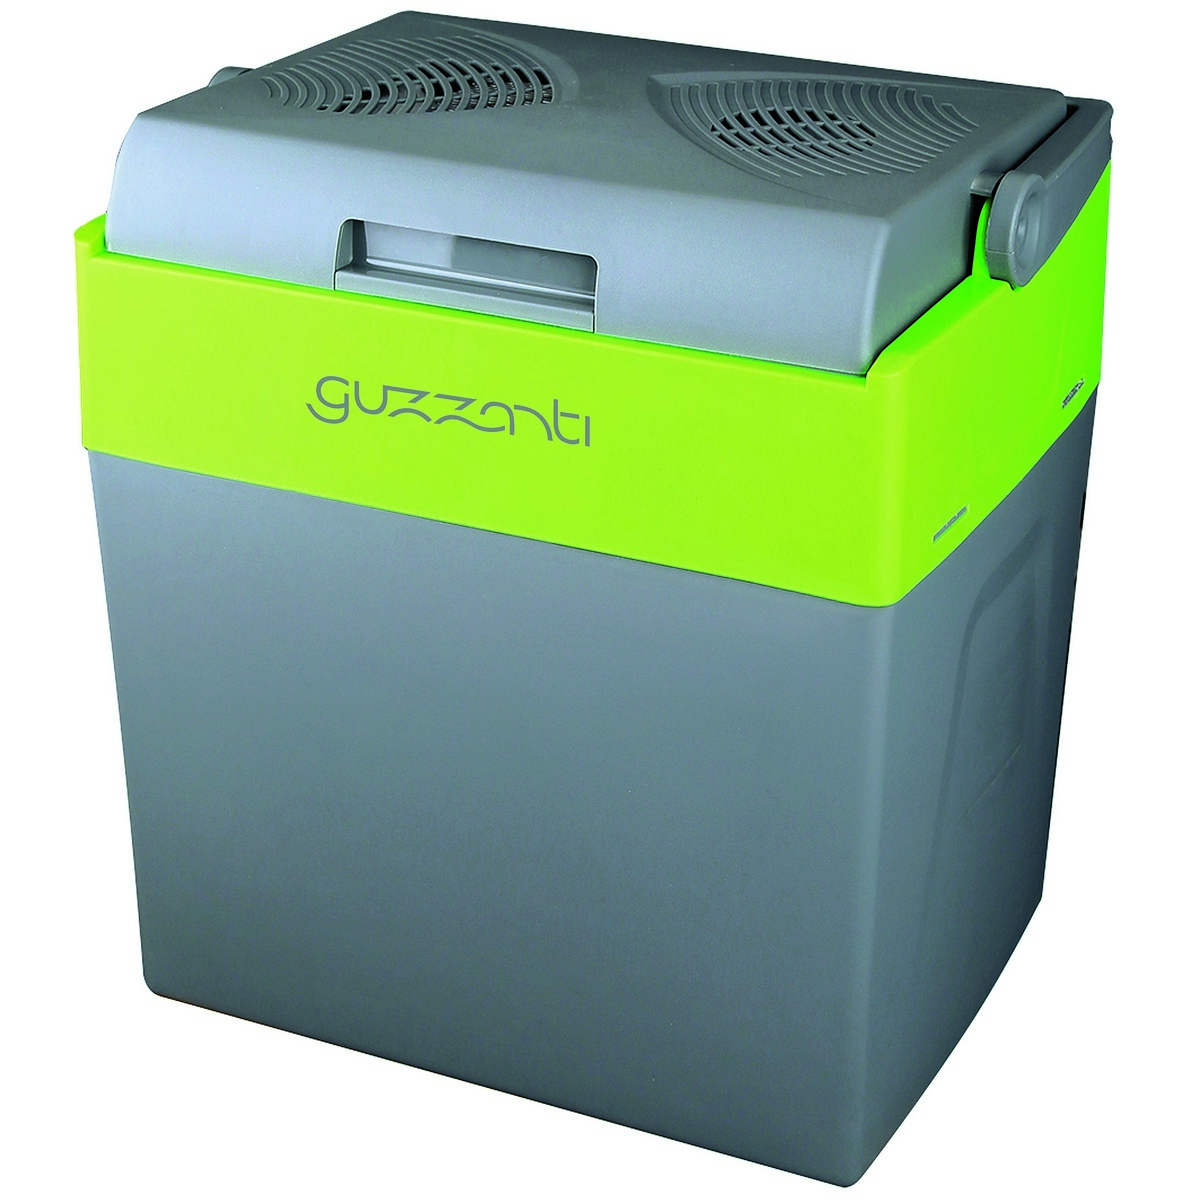 Guzzanti GZ 30B termoelektrický chladicí box